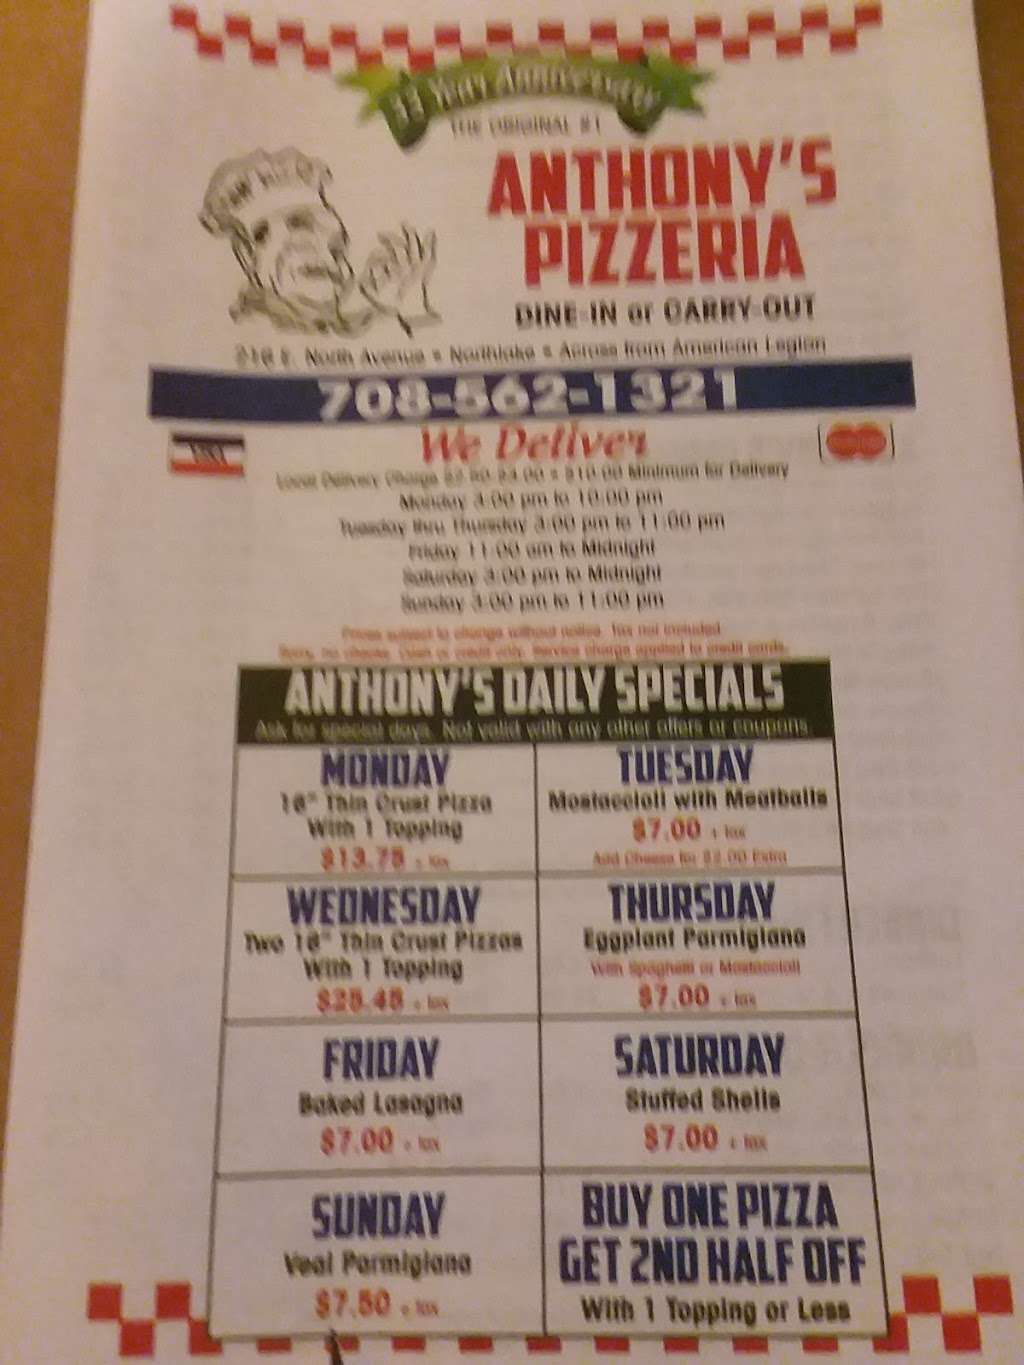 Anthonys Pizzeria | 216 North Ave, Northlake, IL 60164 | Phone: (708) 562-1321